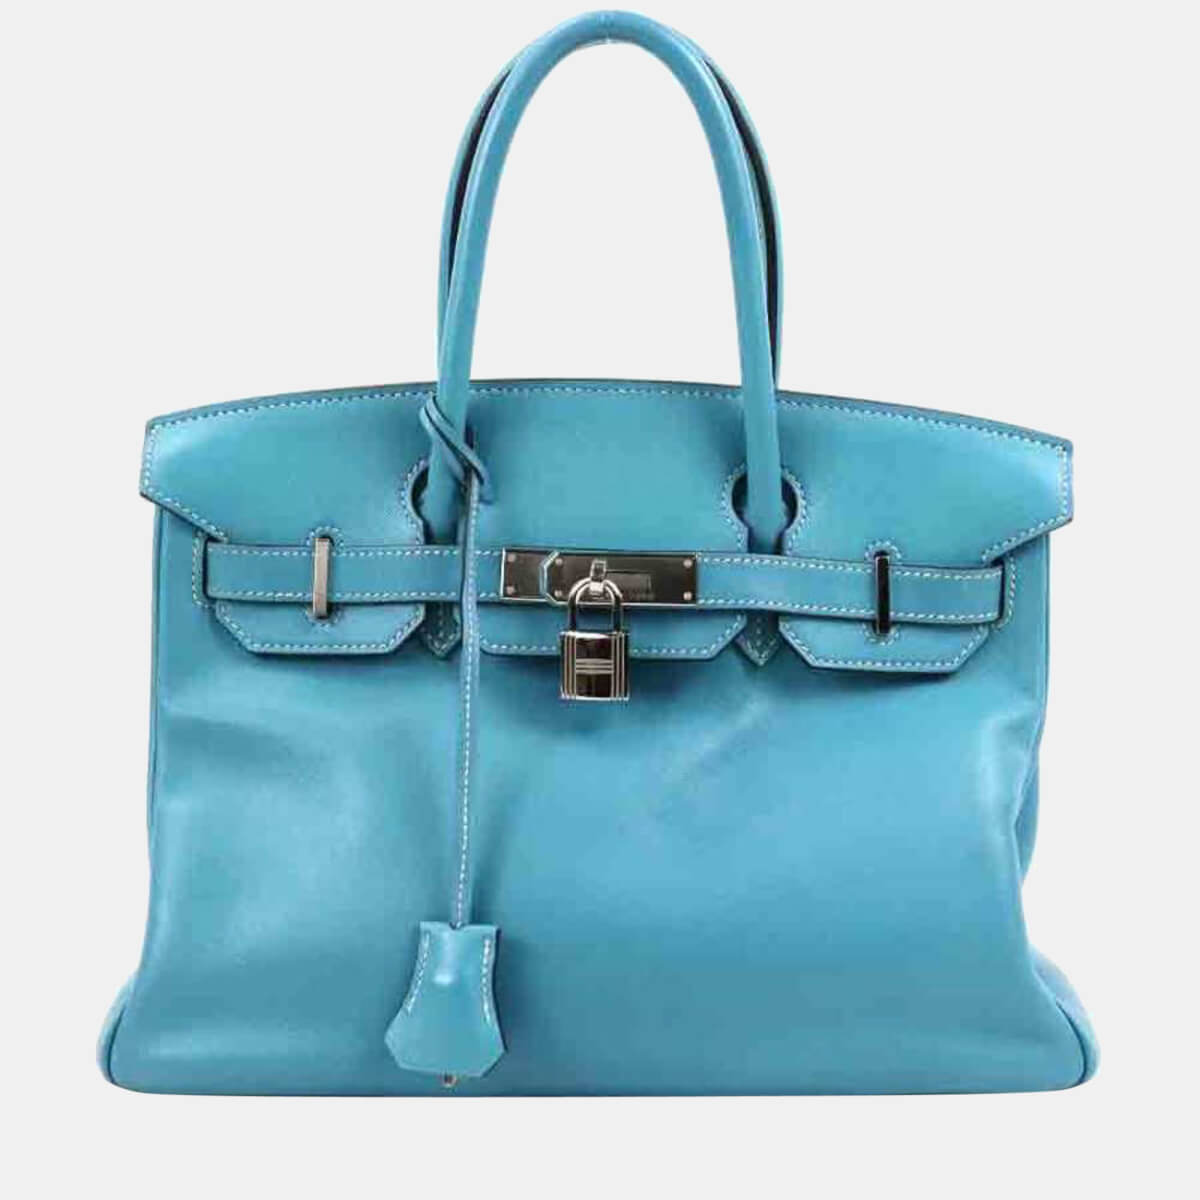 Hermes handbag Birkin 30 vauxwift turquoise silver ladies